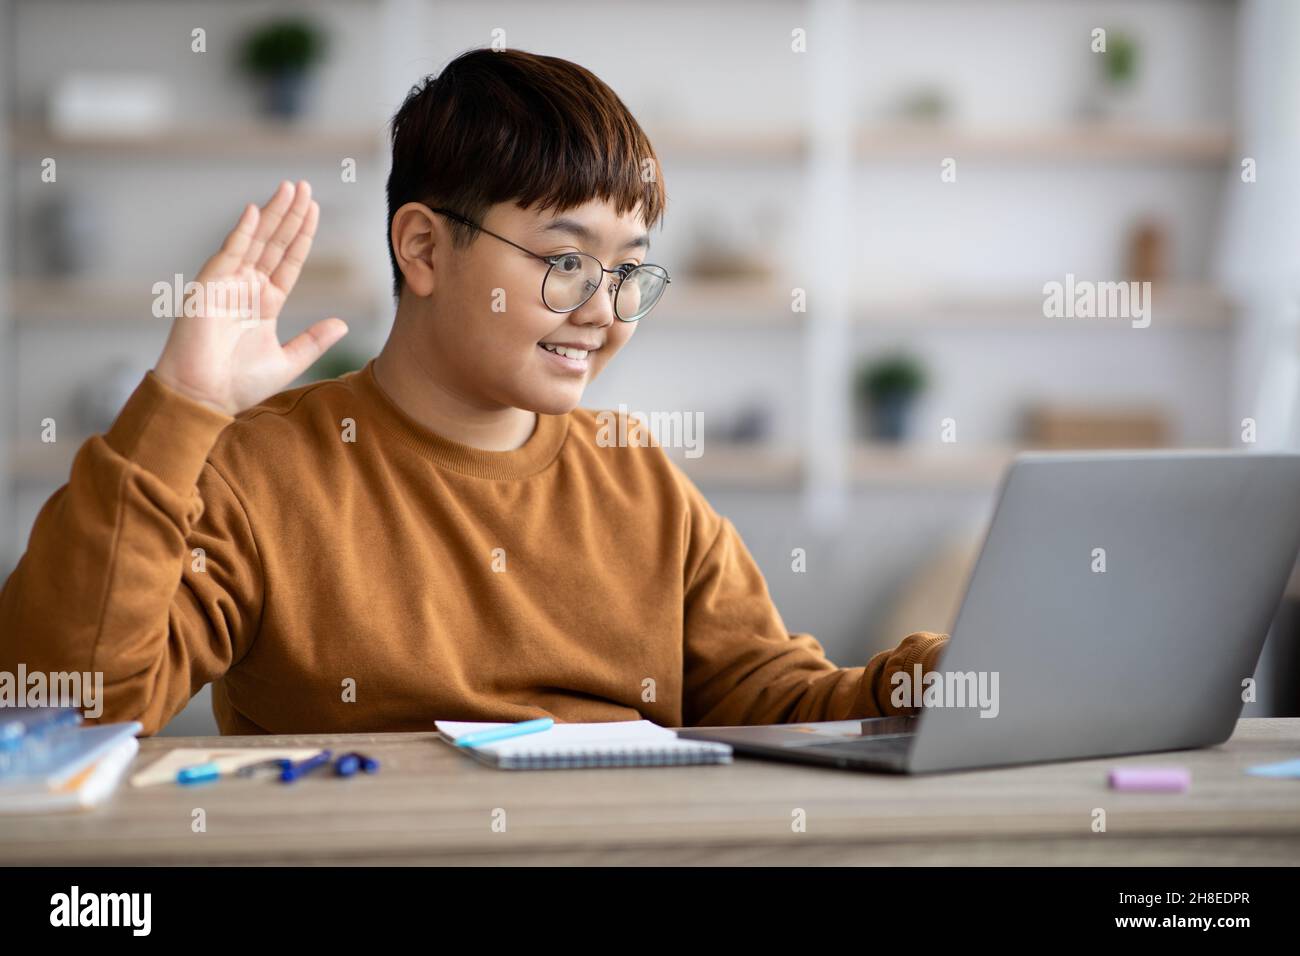 Smiling korean chubby boy waving at laptop screen Stock Photo